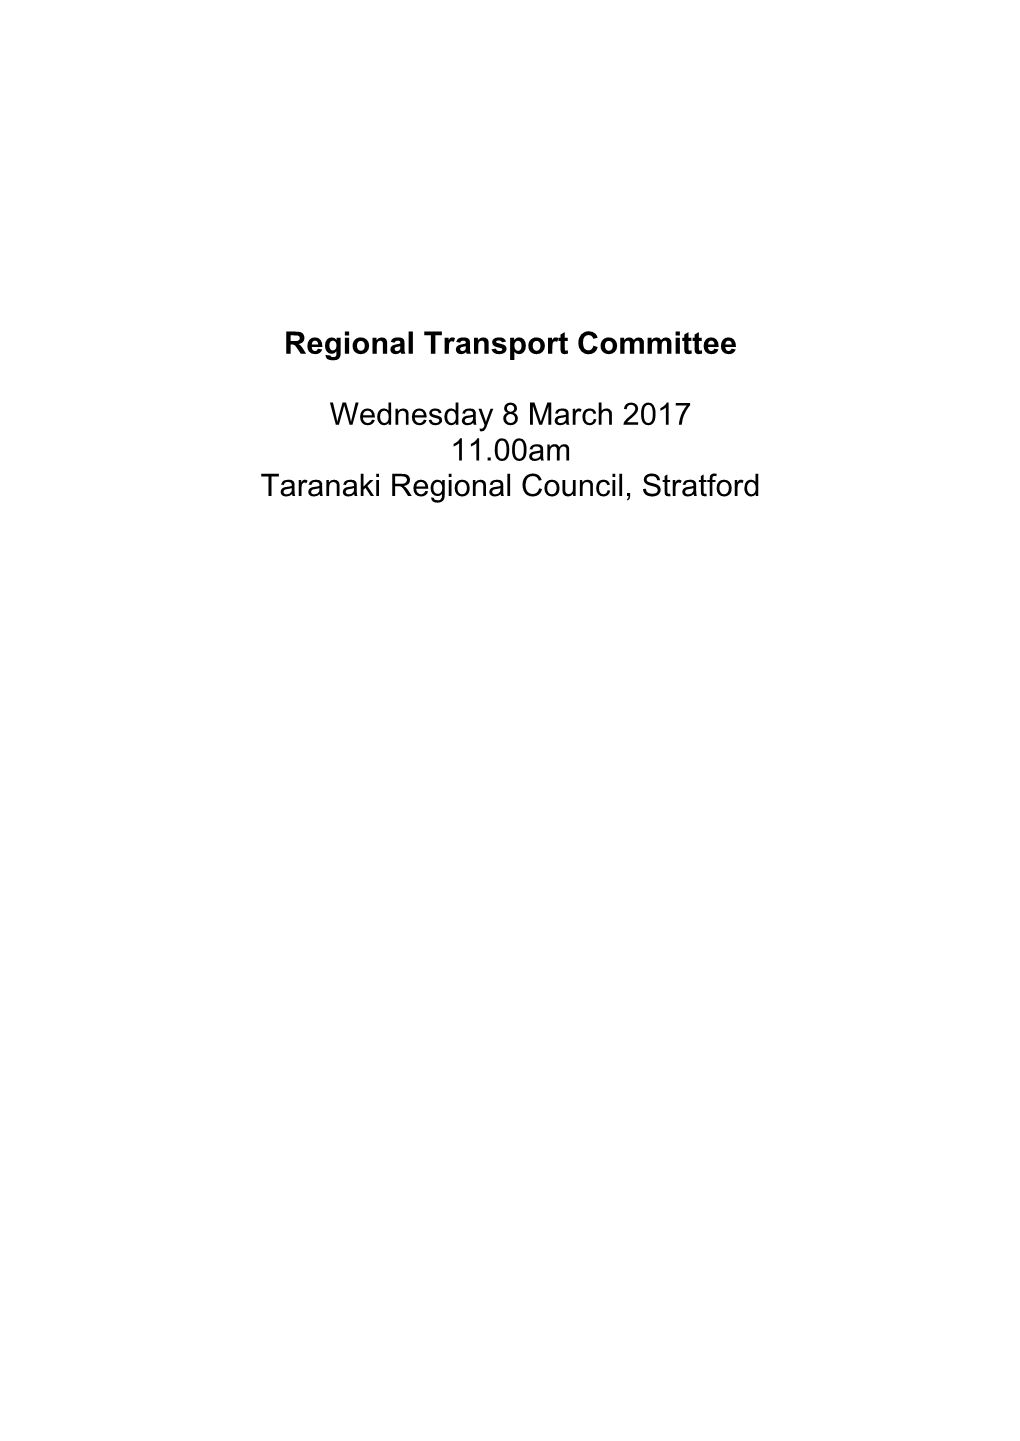 Regional Transport Committee Agenda March 2017